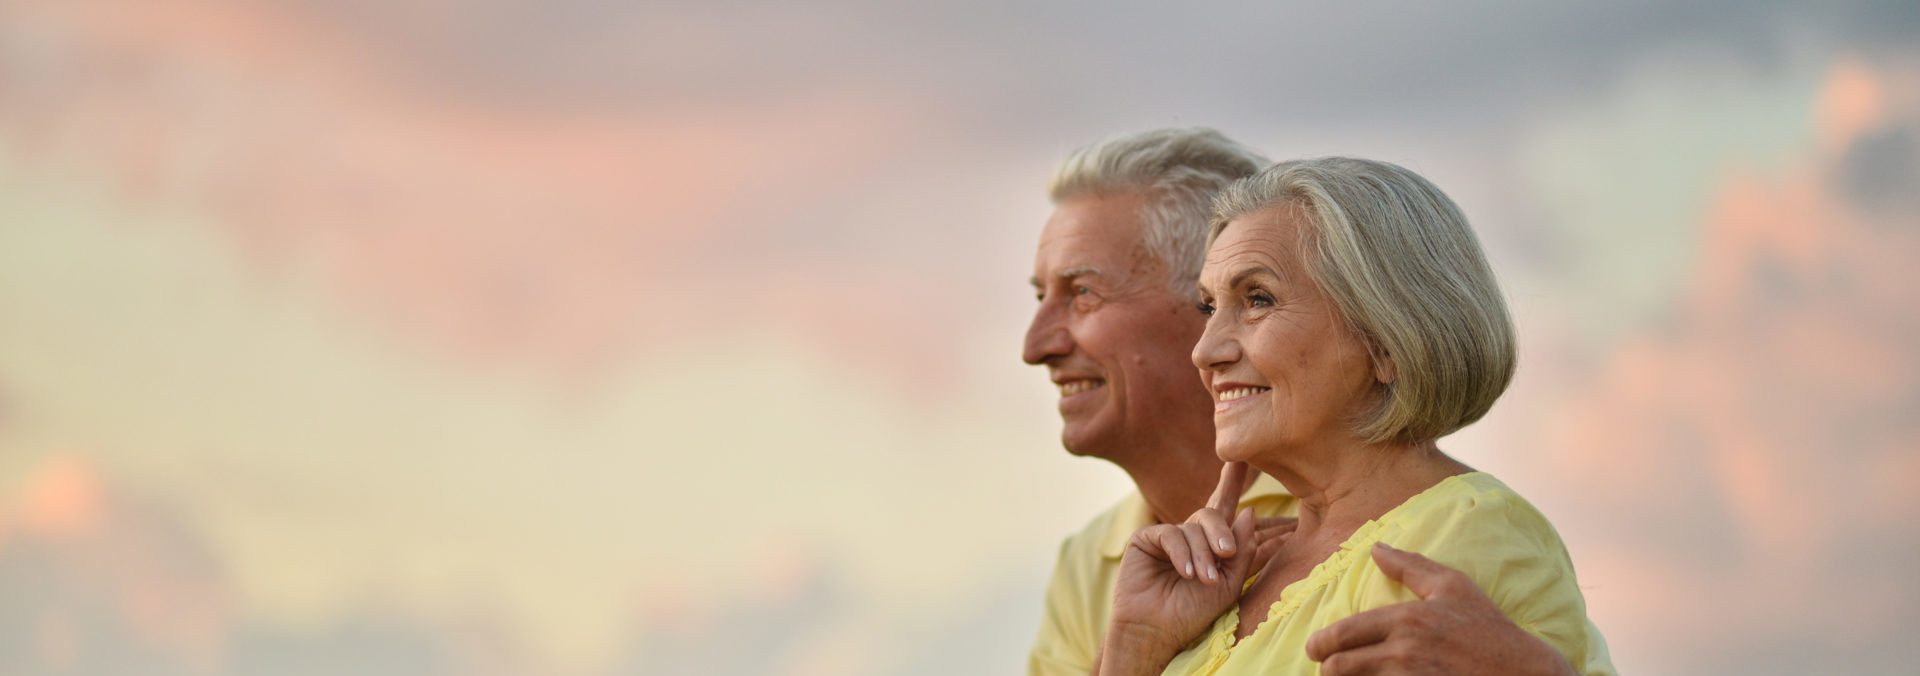 elderly couple on the background of sky